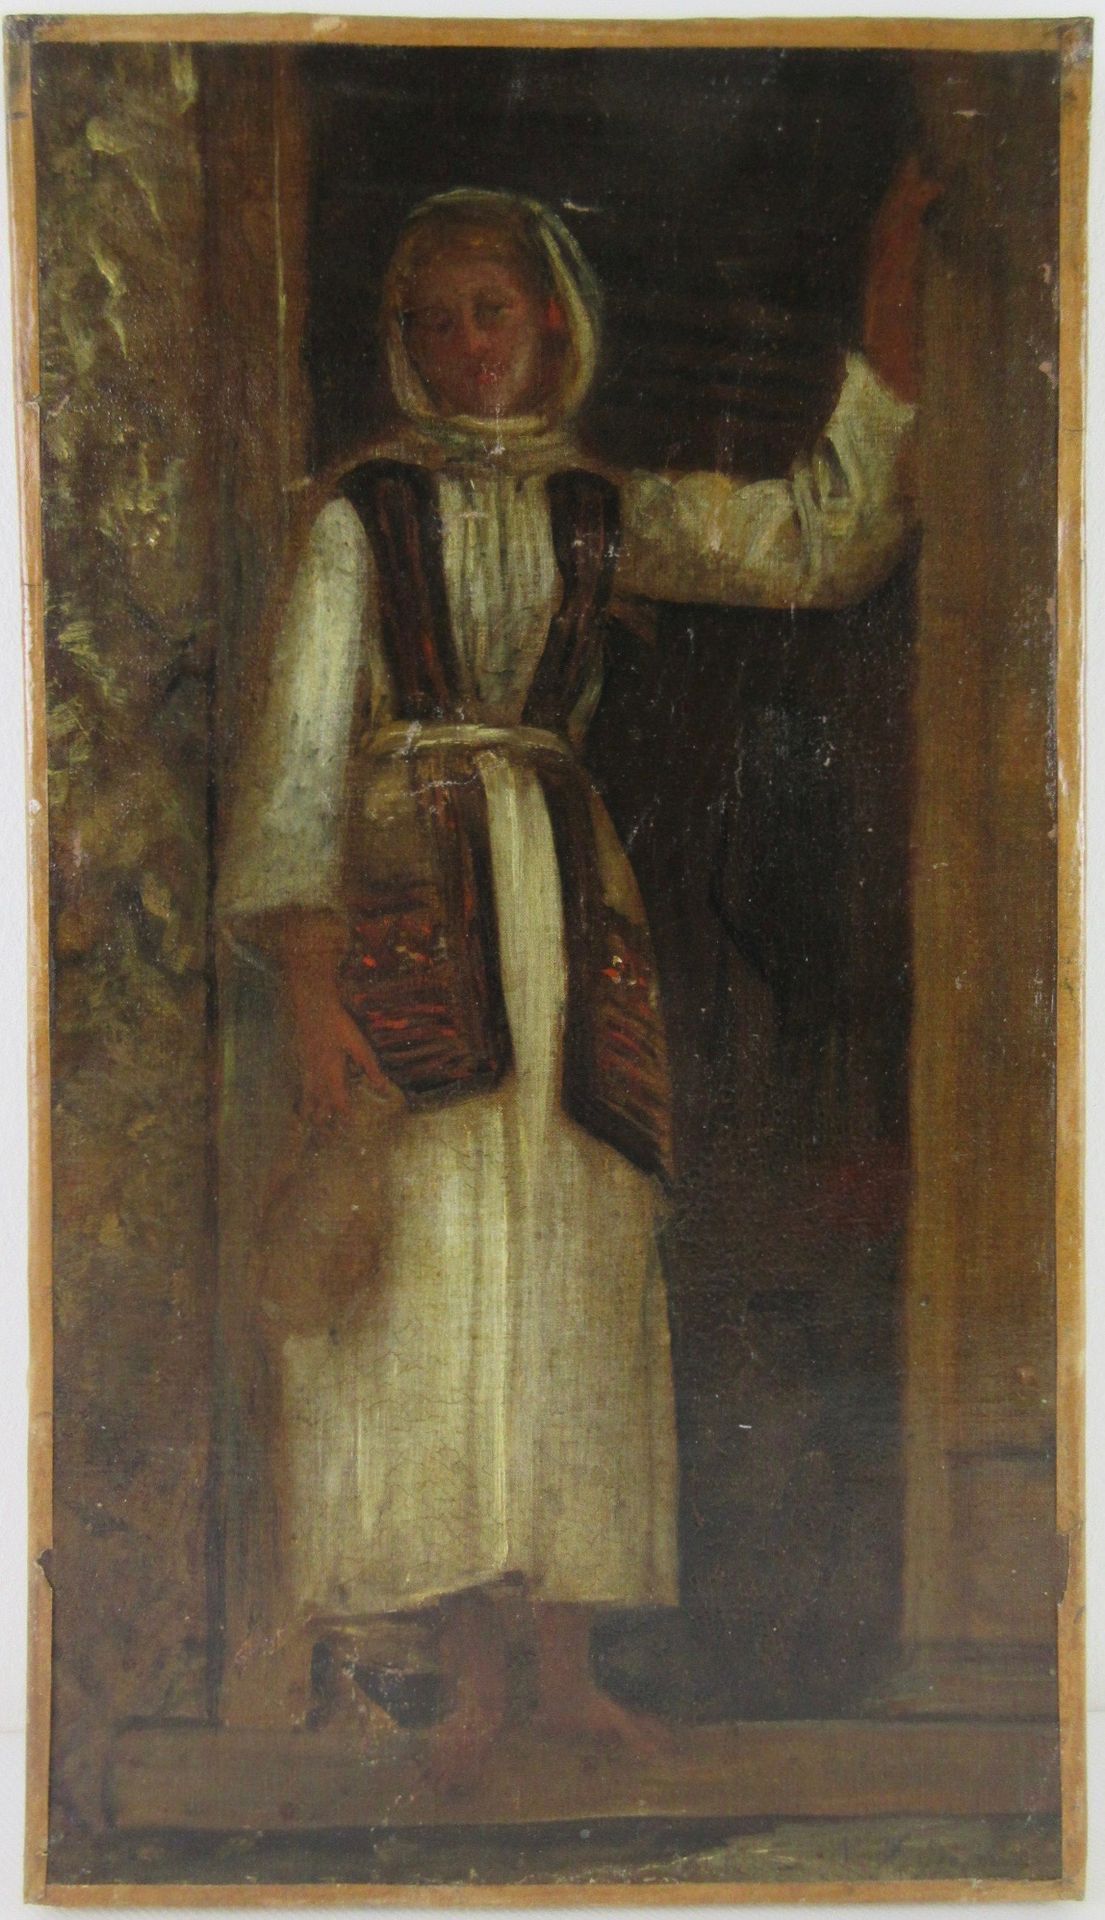 Null 19世纪希腊画派。布面油画，"带罐子的女人"，右下角签名（难以辨认），43 x 24.5厘米